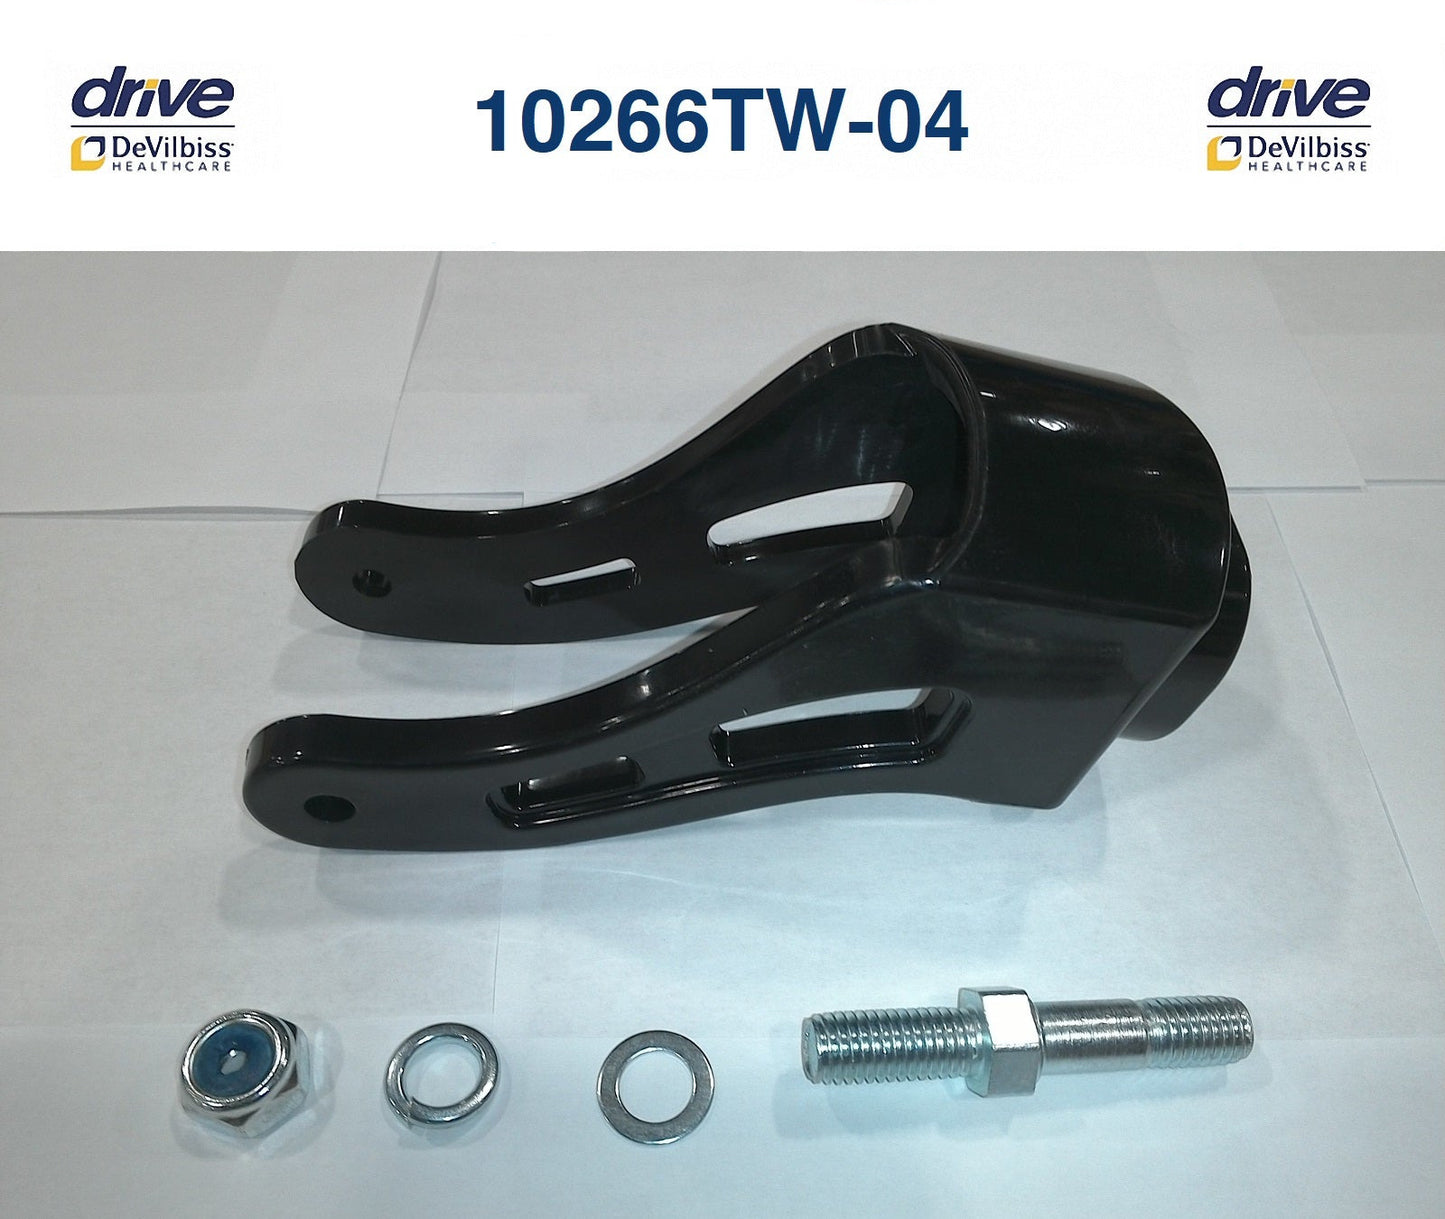 Drive Nitro RTL10266TWHL 3-wheel rollator parts list